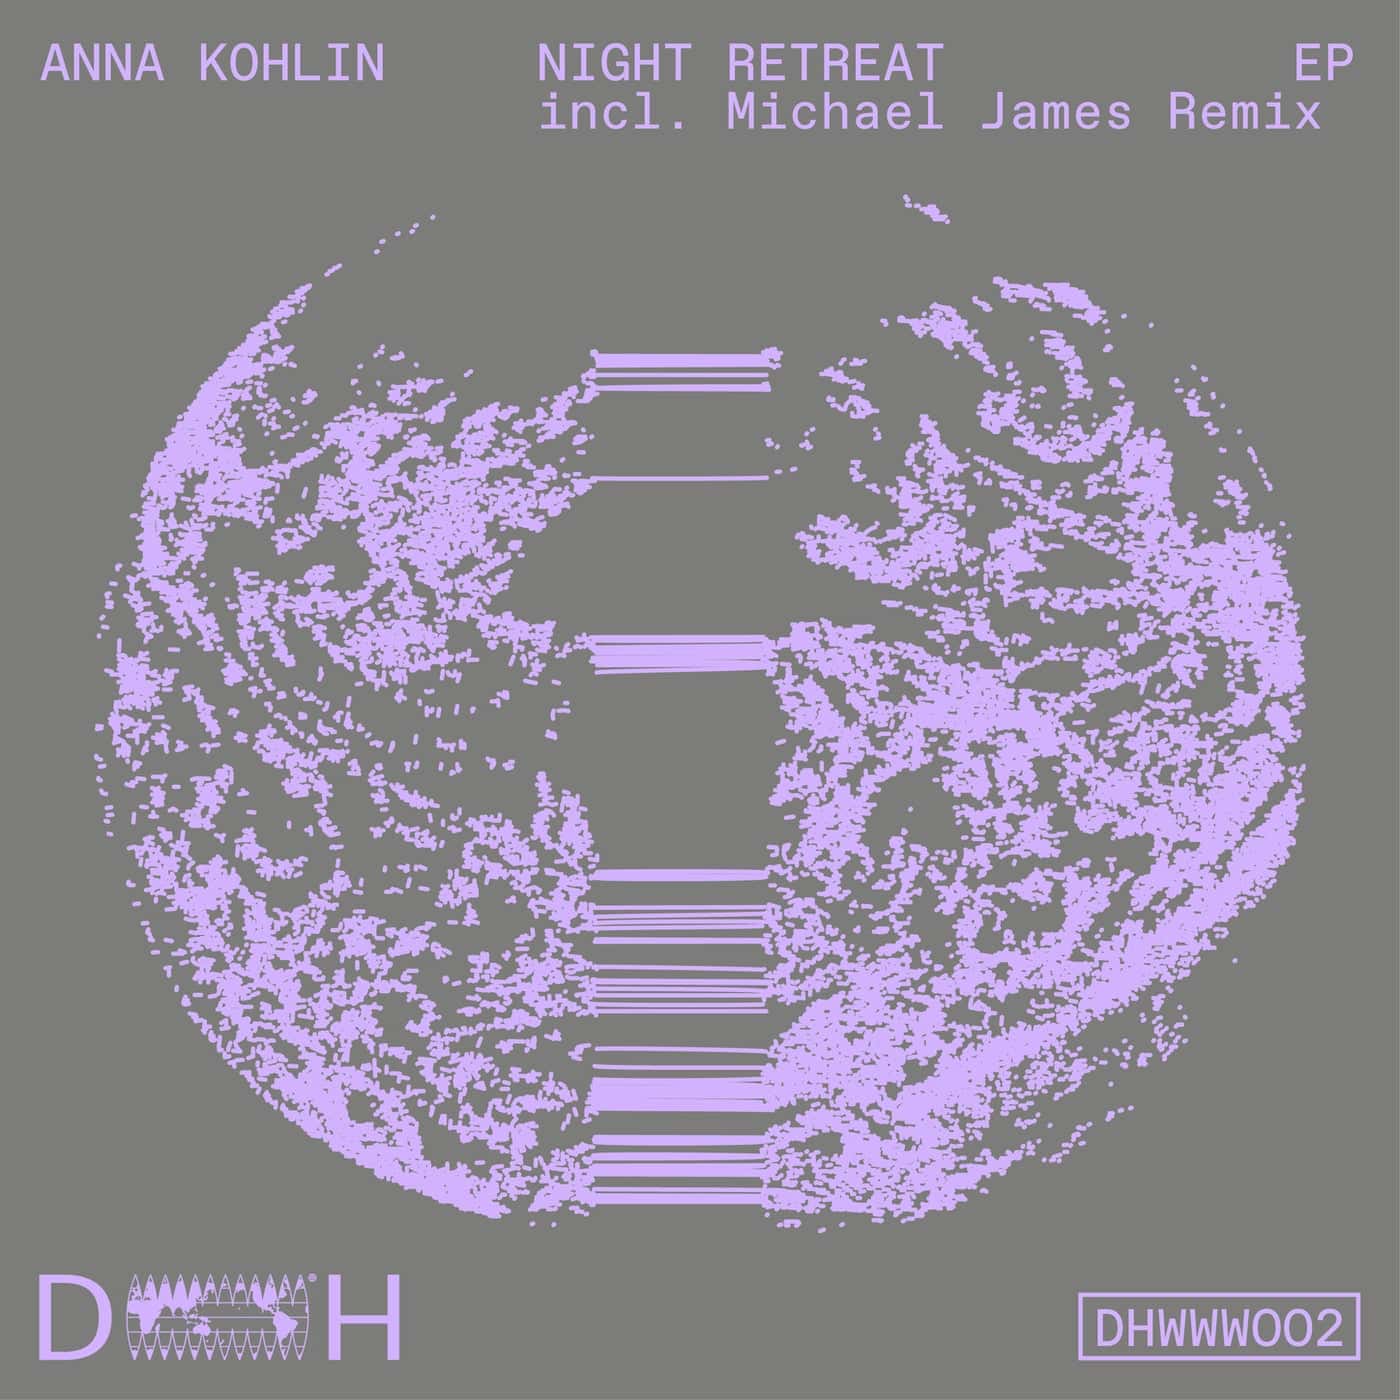 image cover: Anna Kohlin - Night Retreat EP / DHWWW002